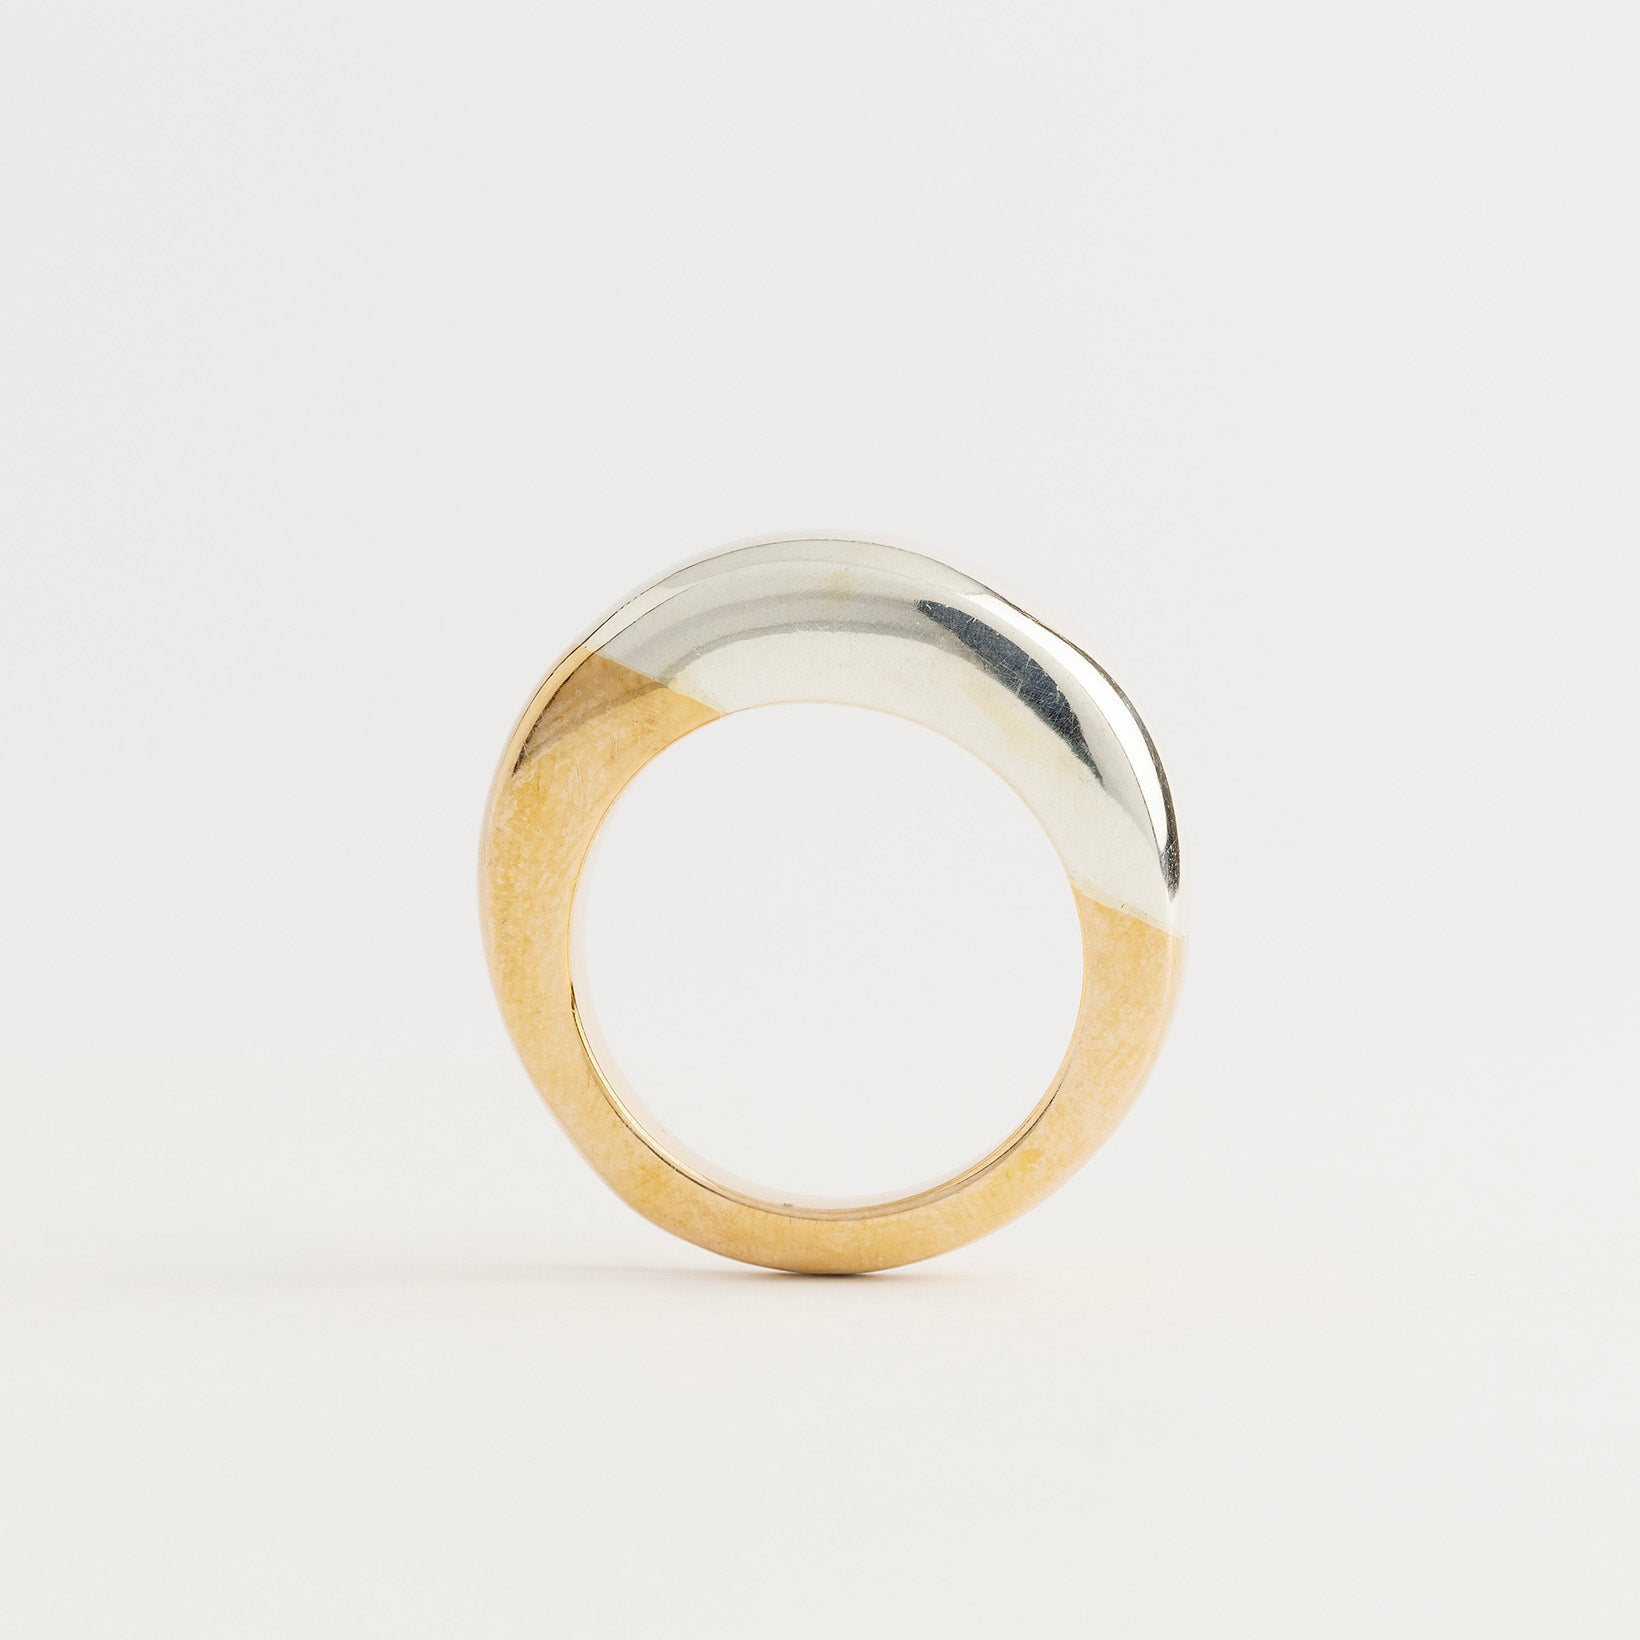 half silver and half bronze ring by ester studio photo by stefania meli